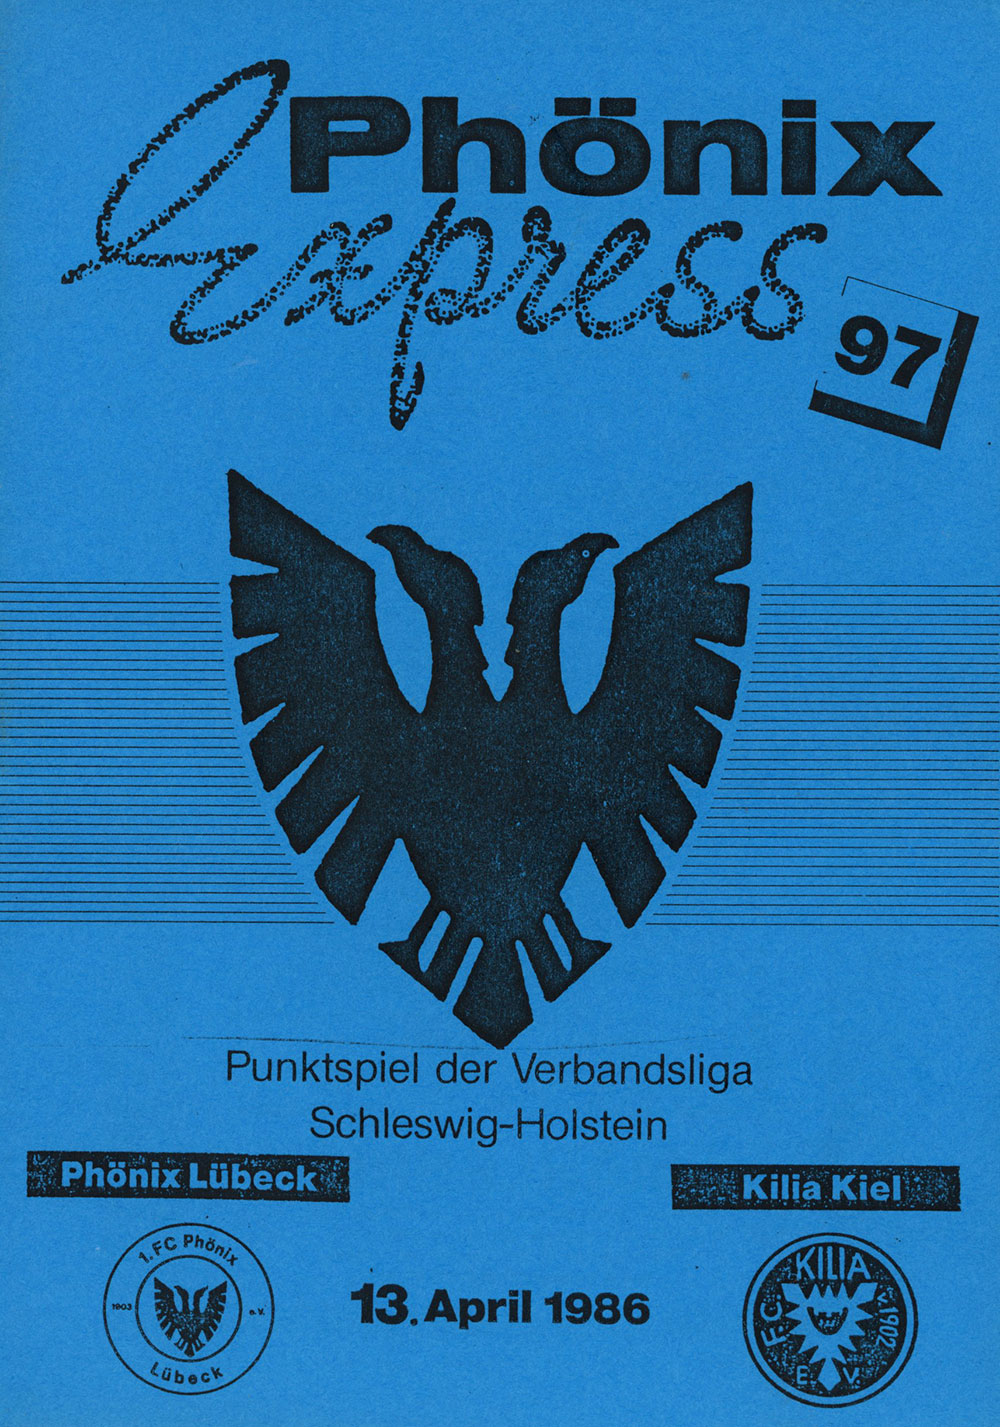 Der Phönix Express Ausgabe 97 vom 13. April 1986